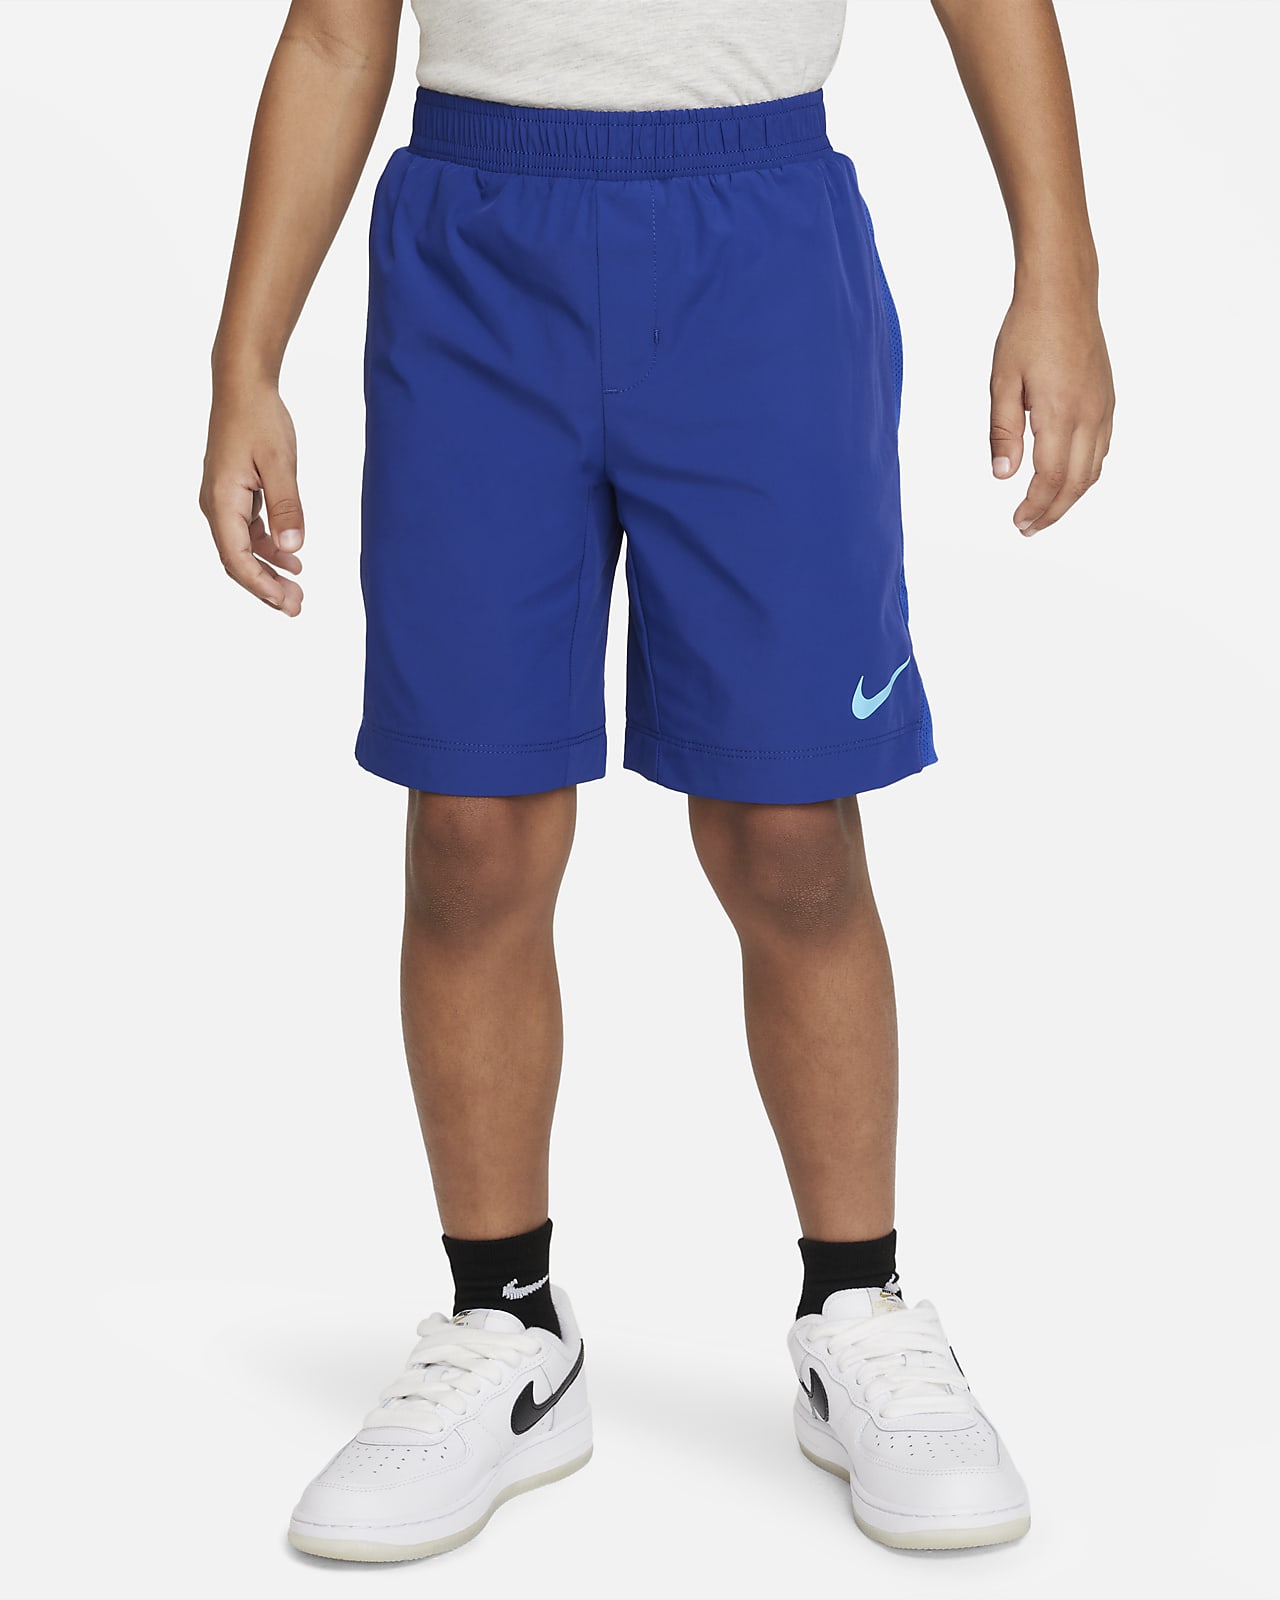 Girls Shorts. Nike JP